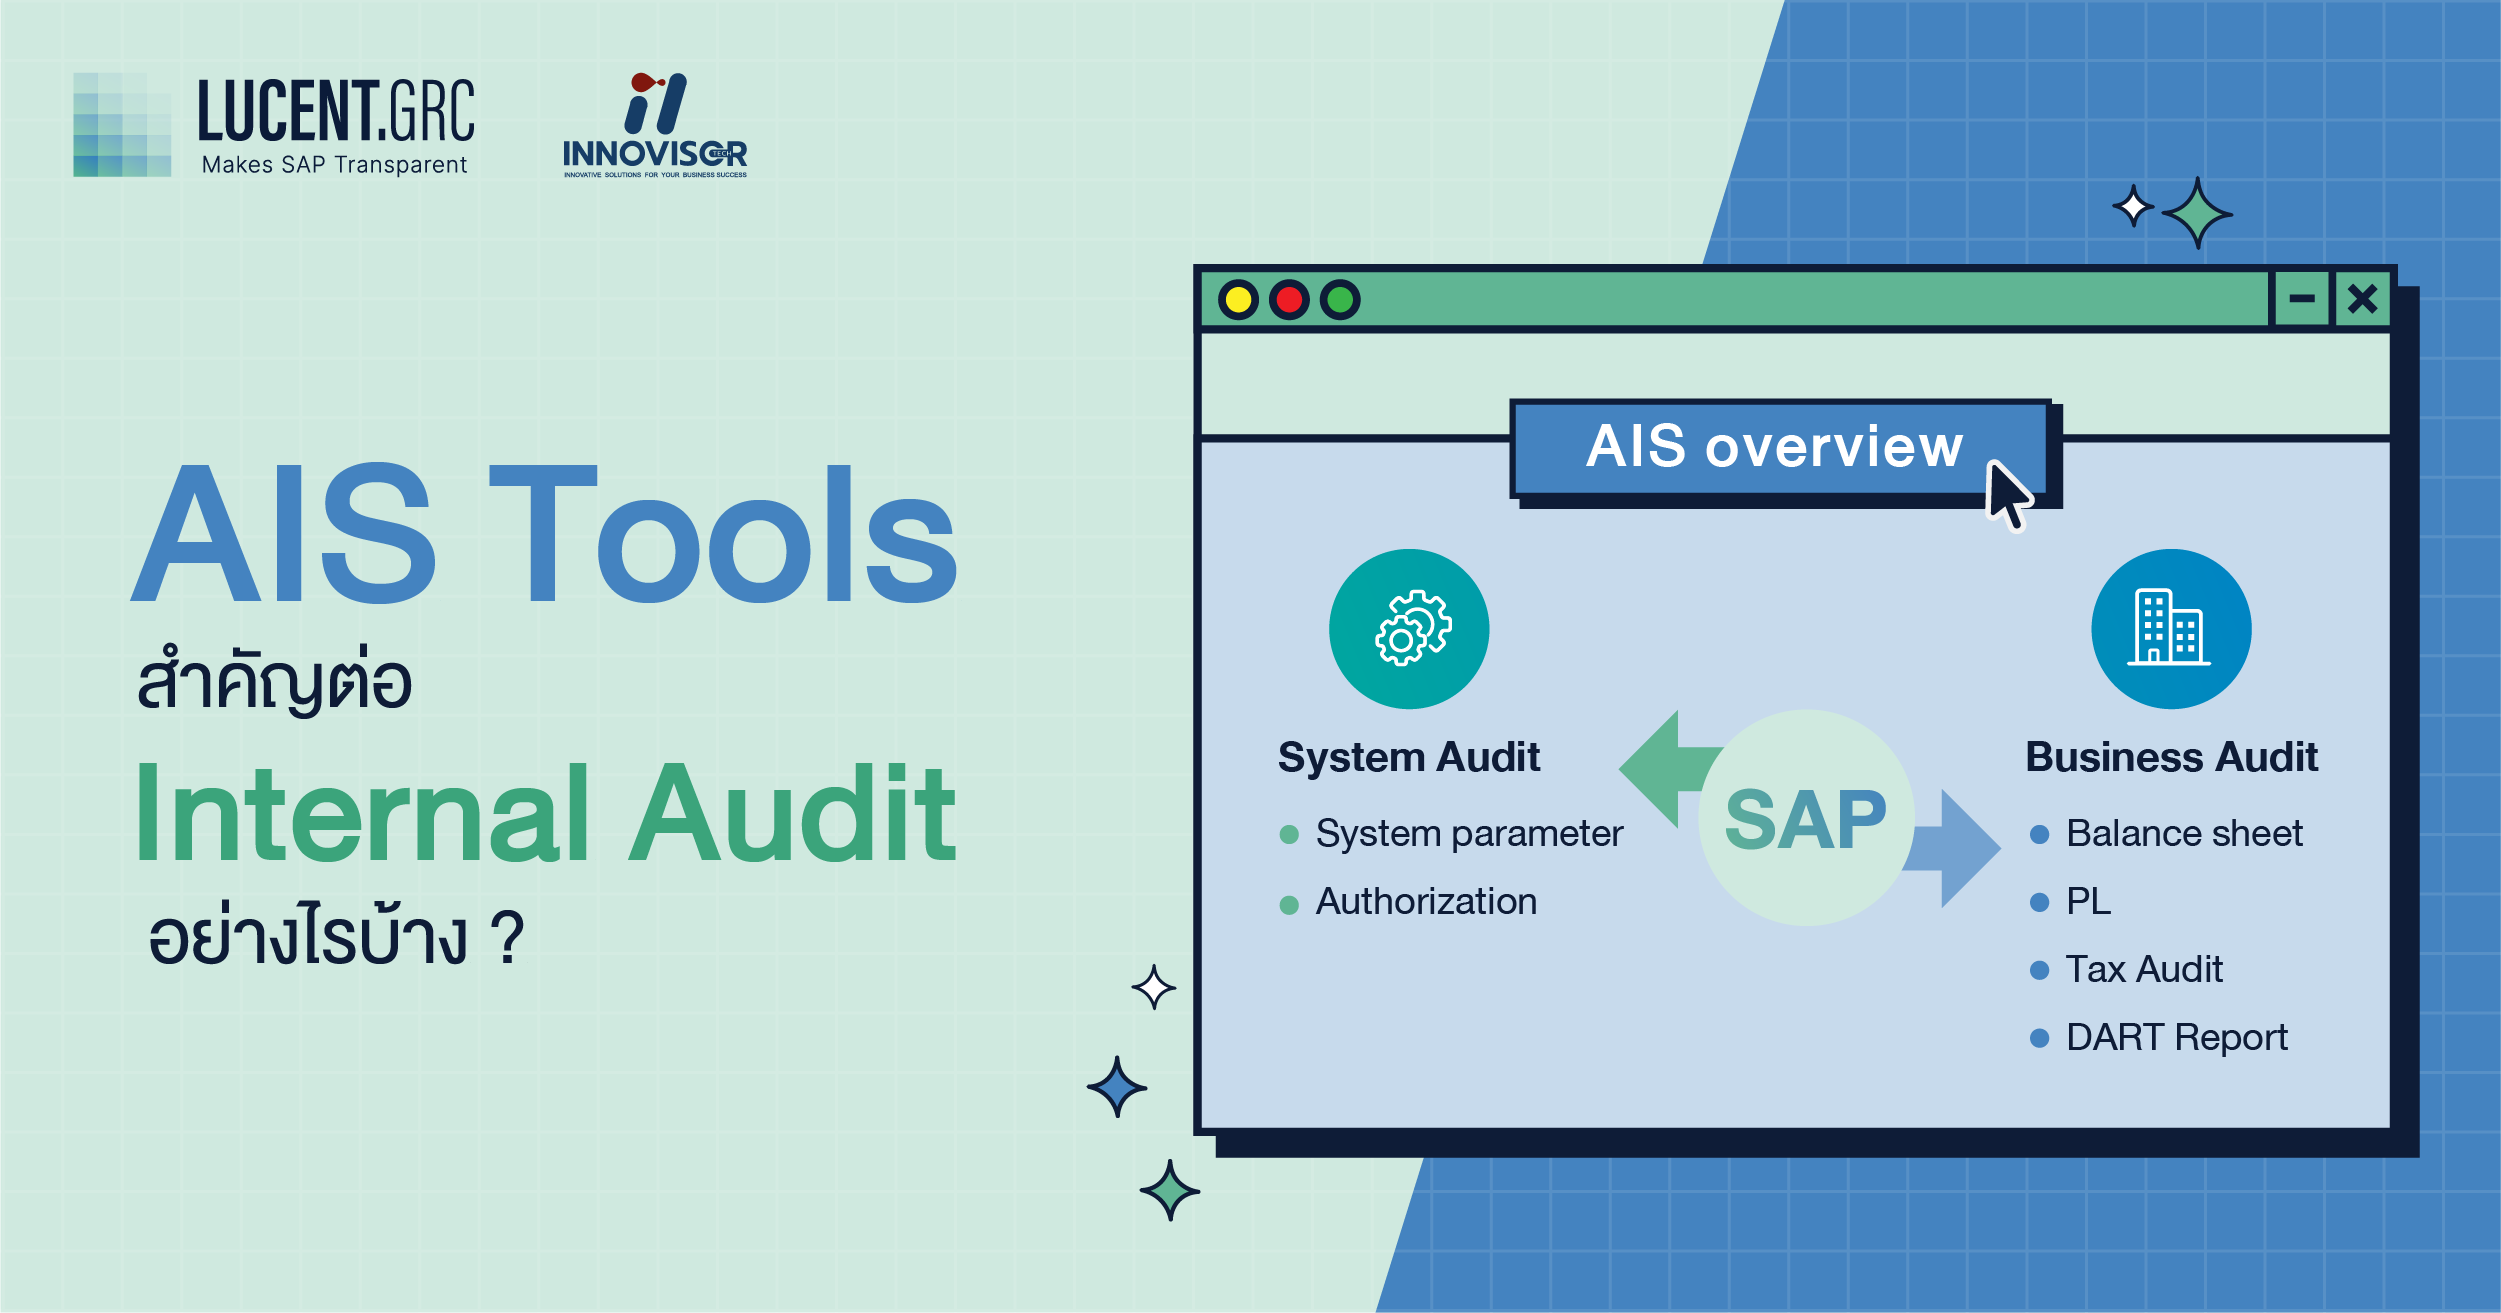 SAP AIS Tools - Internal Audit